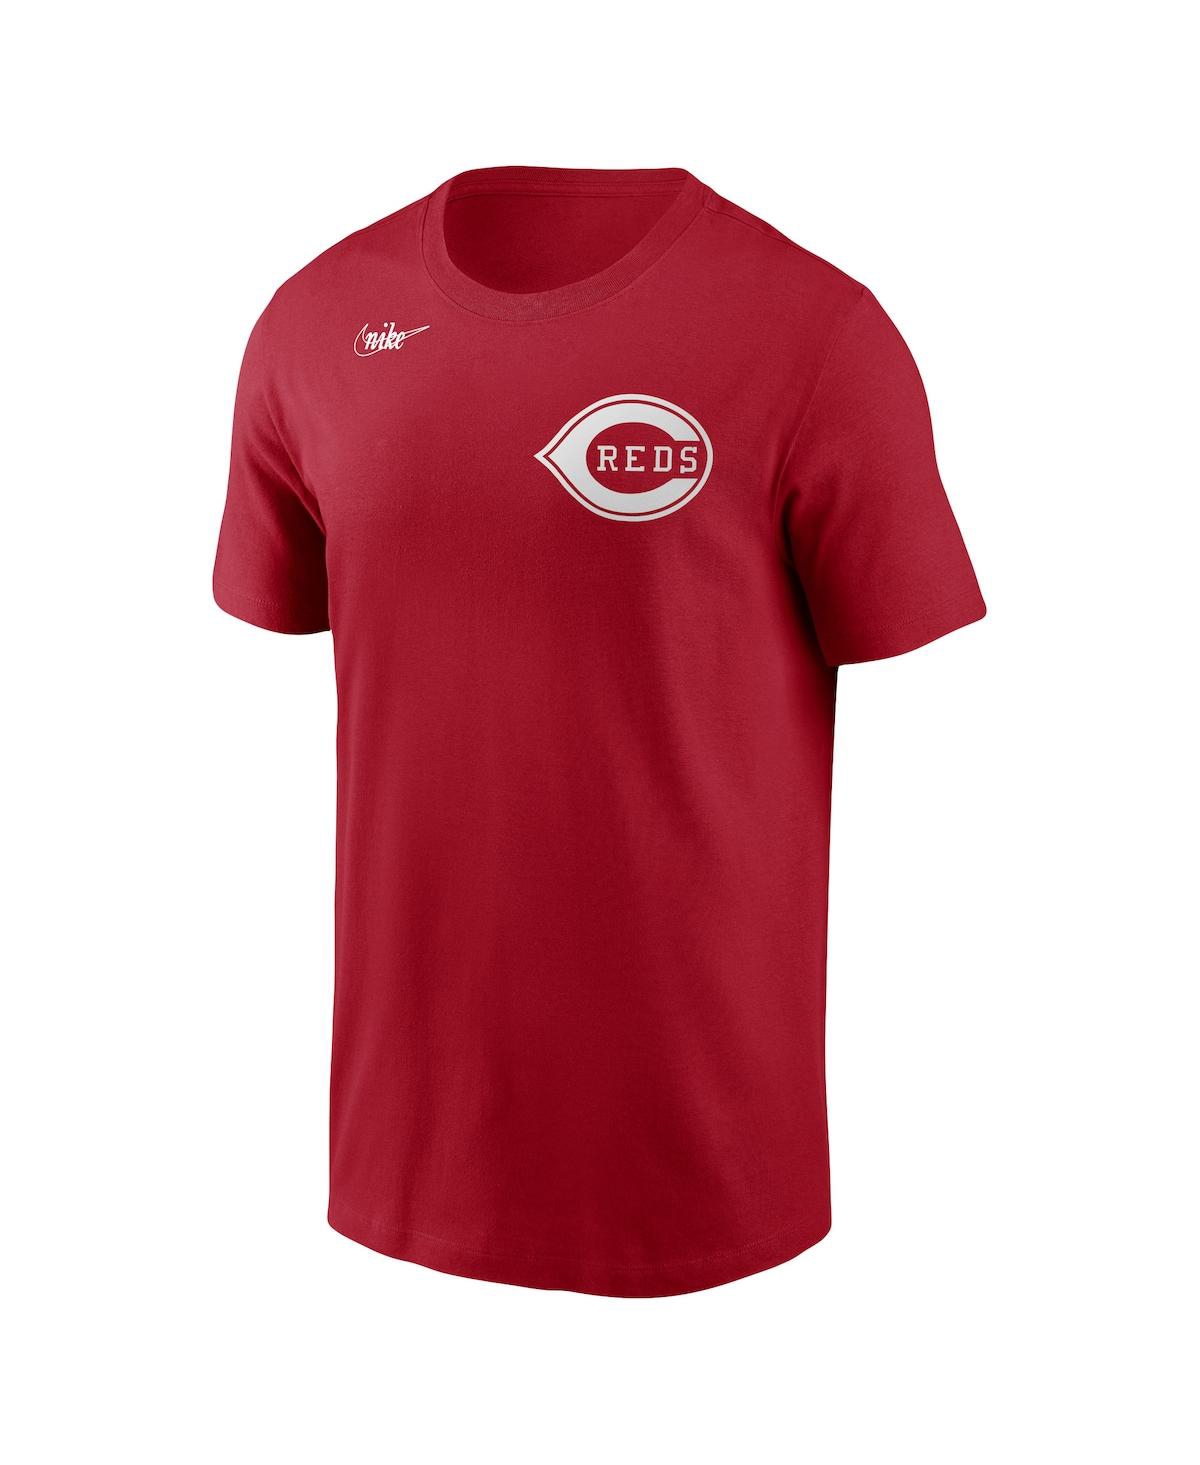 Shop Nike Men's  Barry Larkin Red Cincinnati Reds Cooperstown Collection Name & Number T-shirt